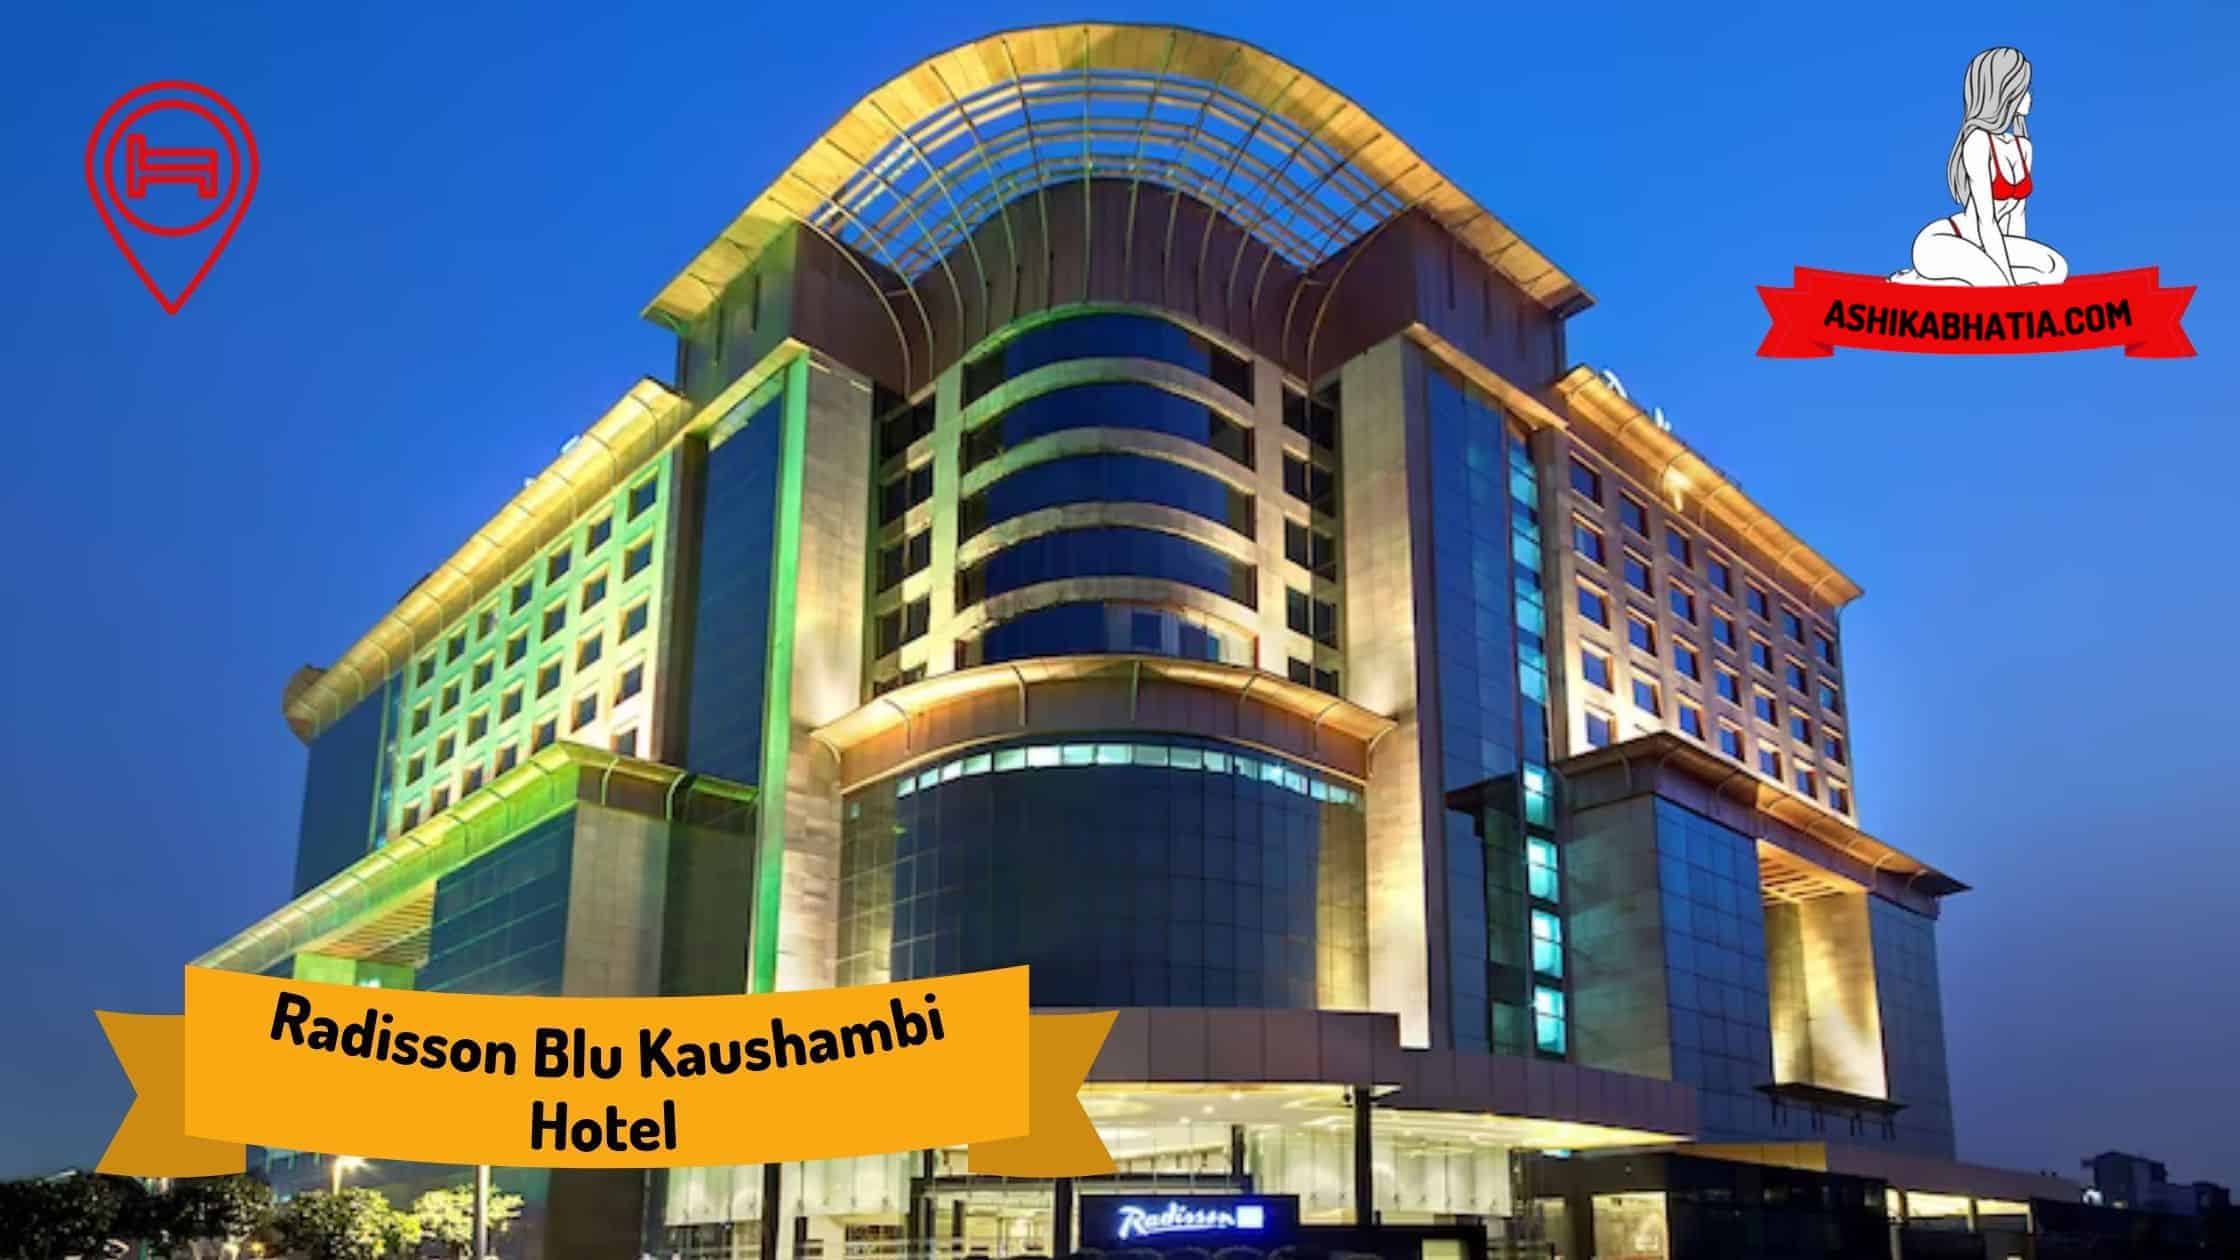 Radisson Blu Kaushambi Hotel Escorts